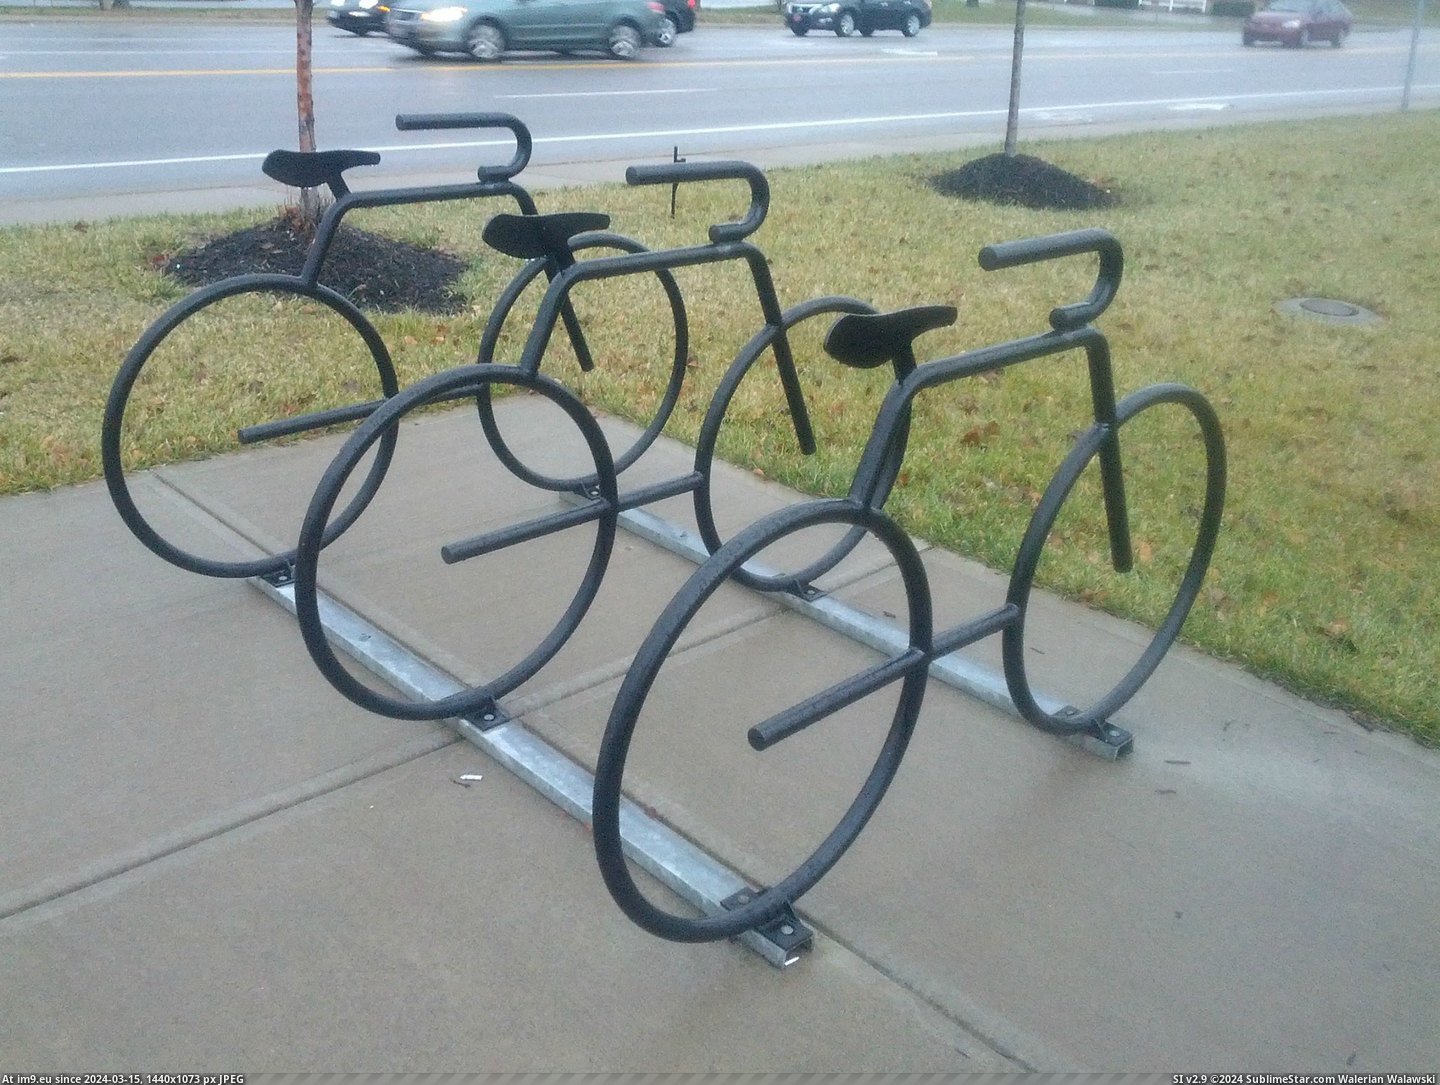 #Bike #Rack #Bikes #Shaped [Mildlyinteresting] This bike rack is shaped like bikes. 2 Pic. (Bild von album My r/MILDLYINTERESTING favs))